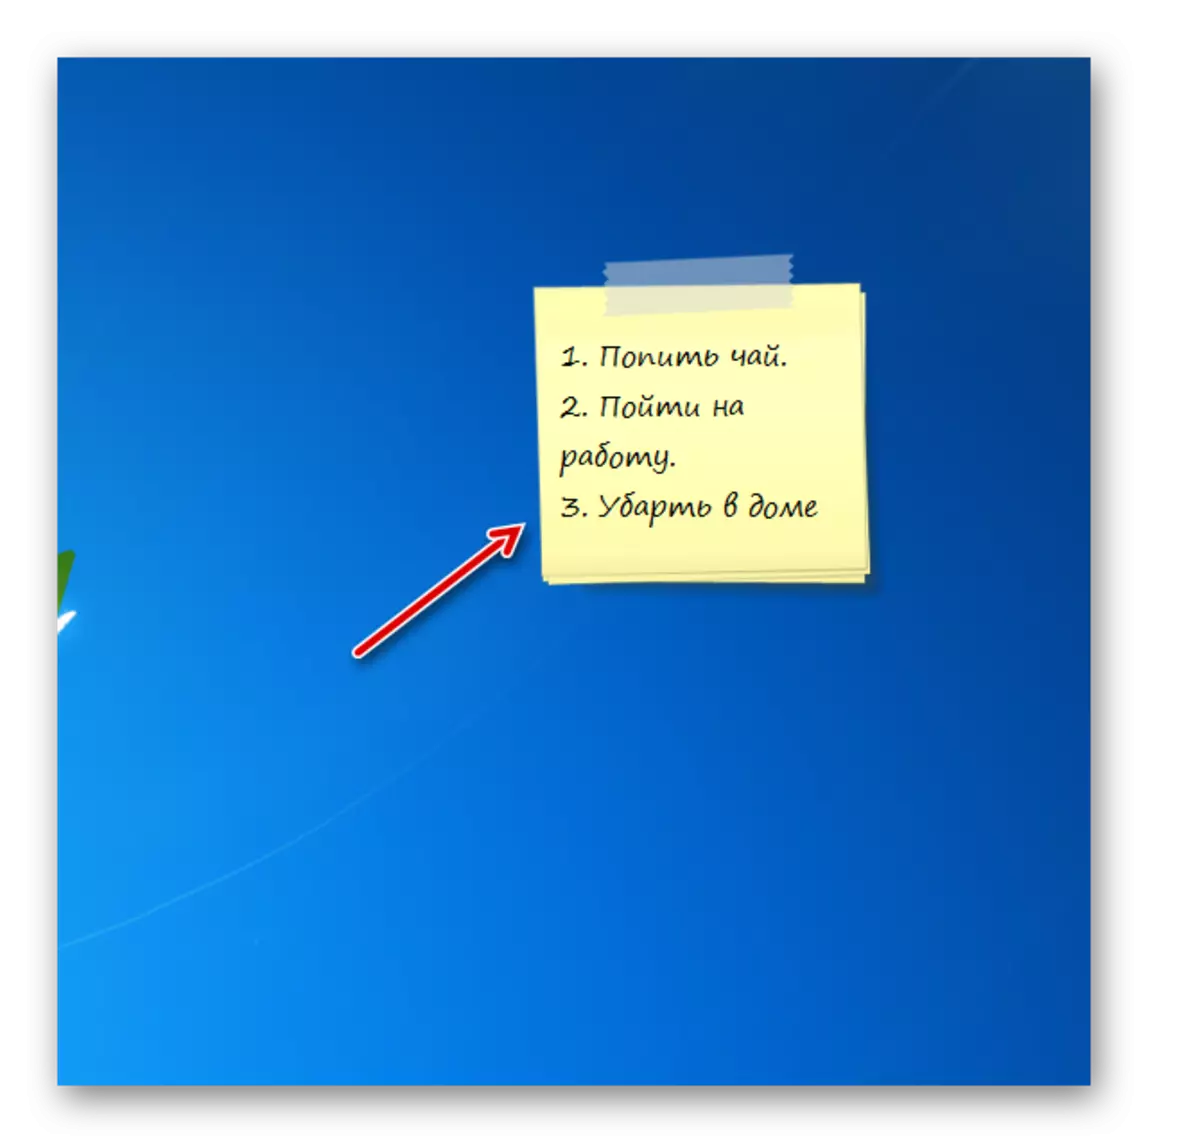 在Windows 7的桌面上的Chameleon NotesColour Gadget接口中的注意事項